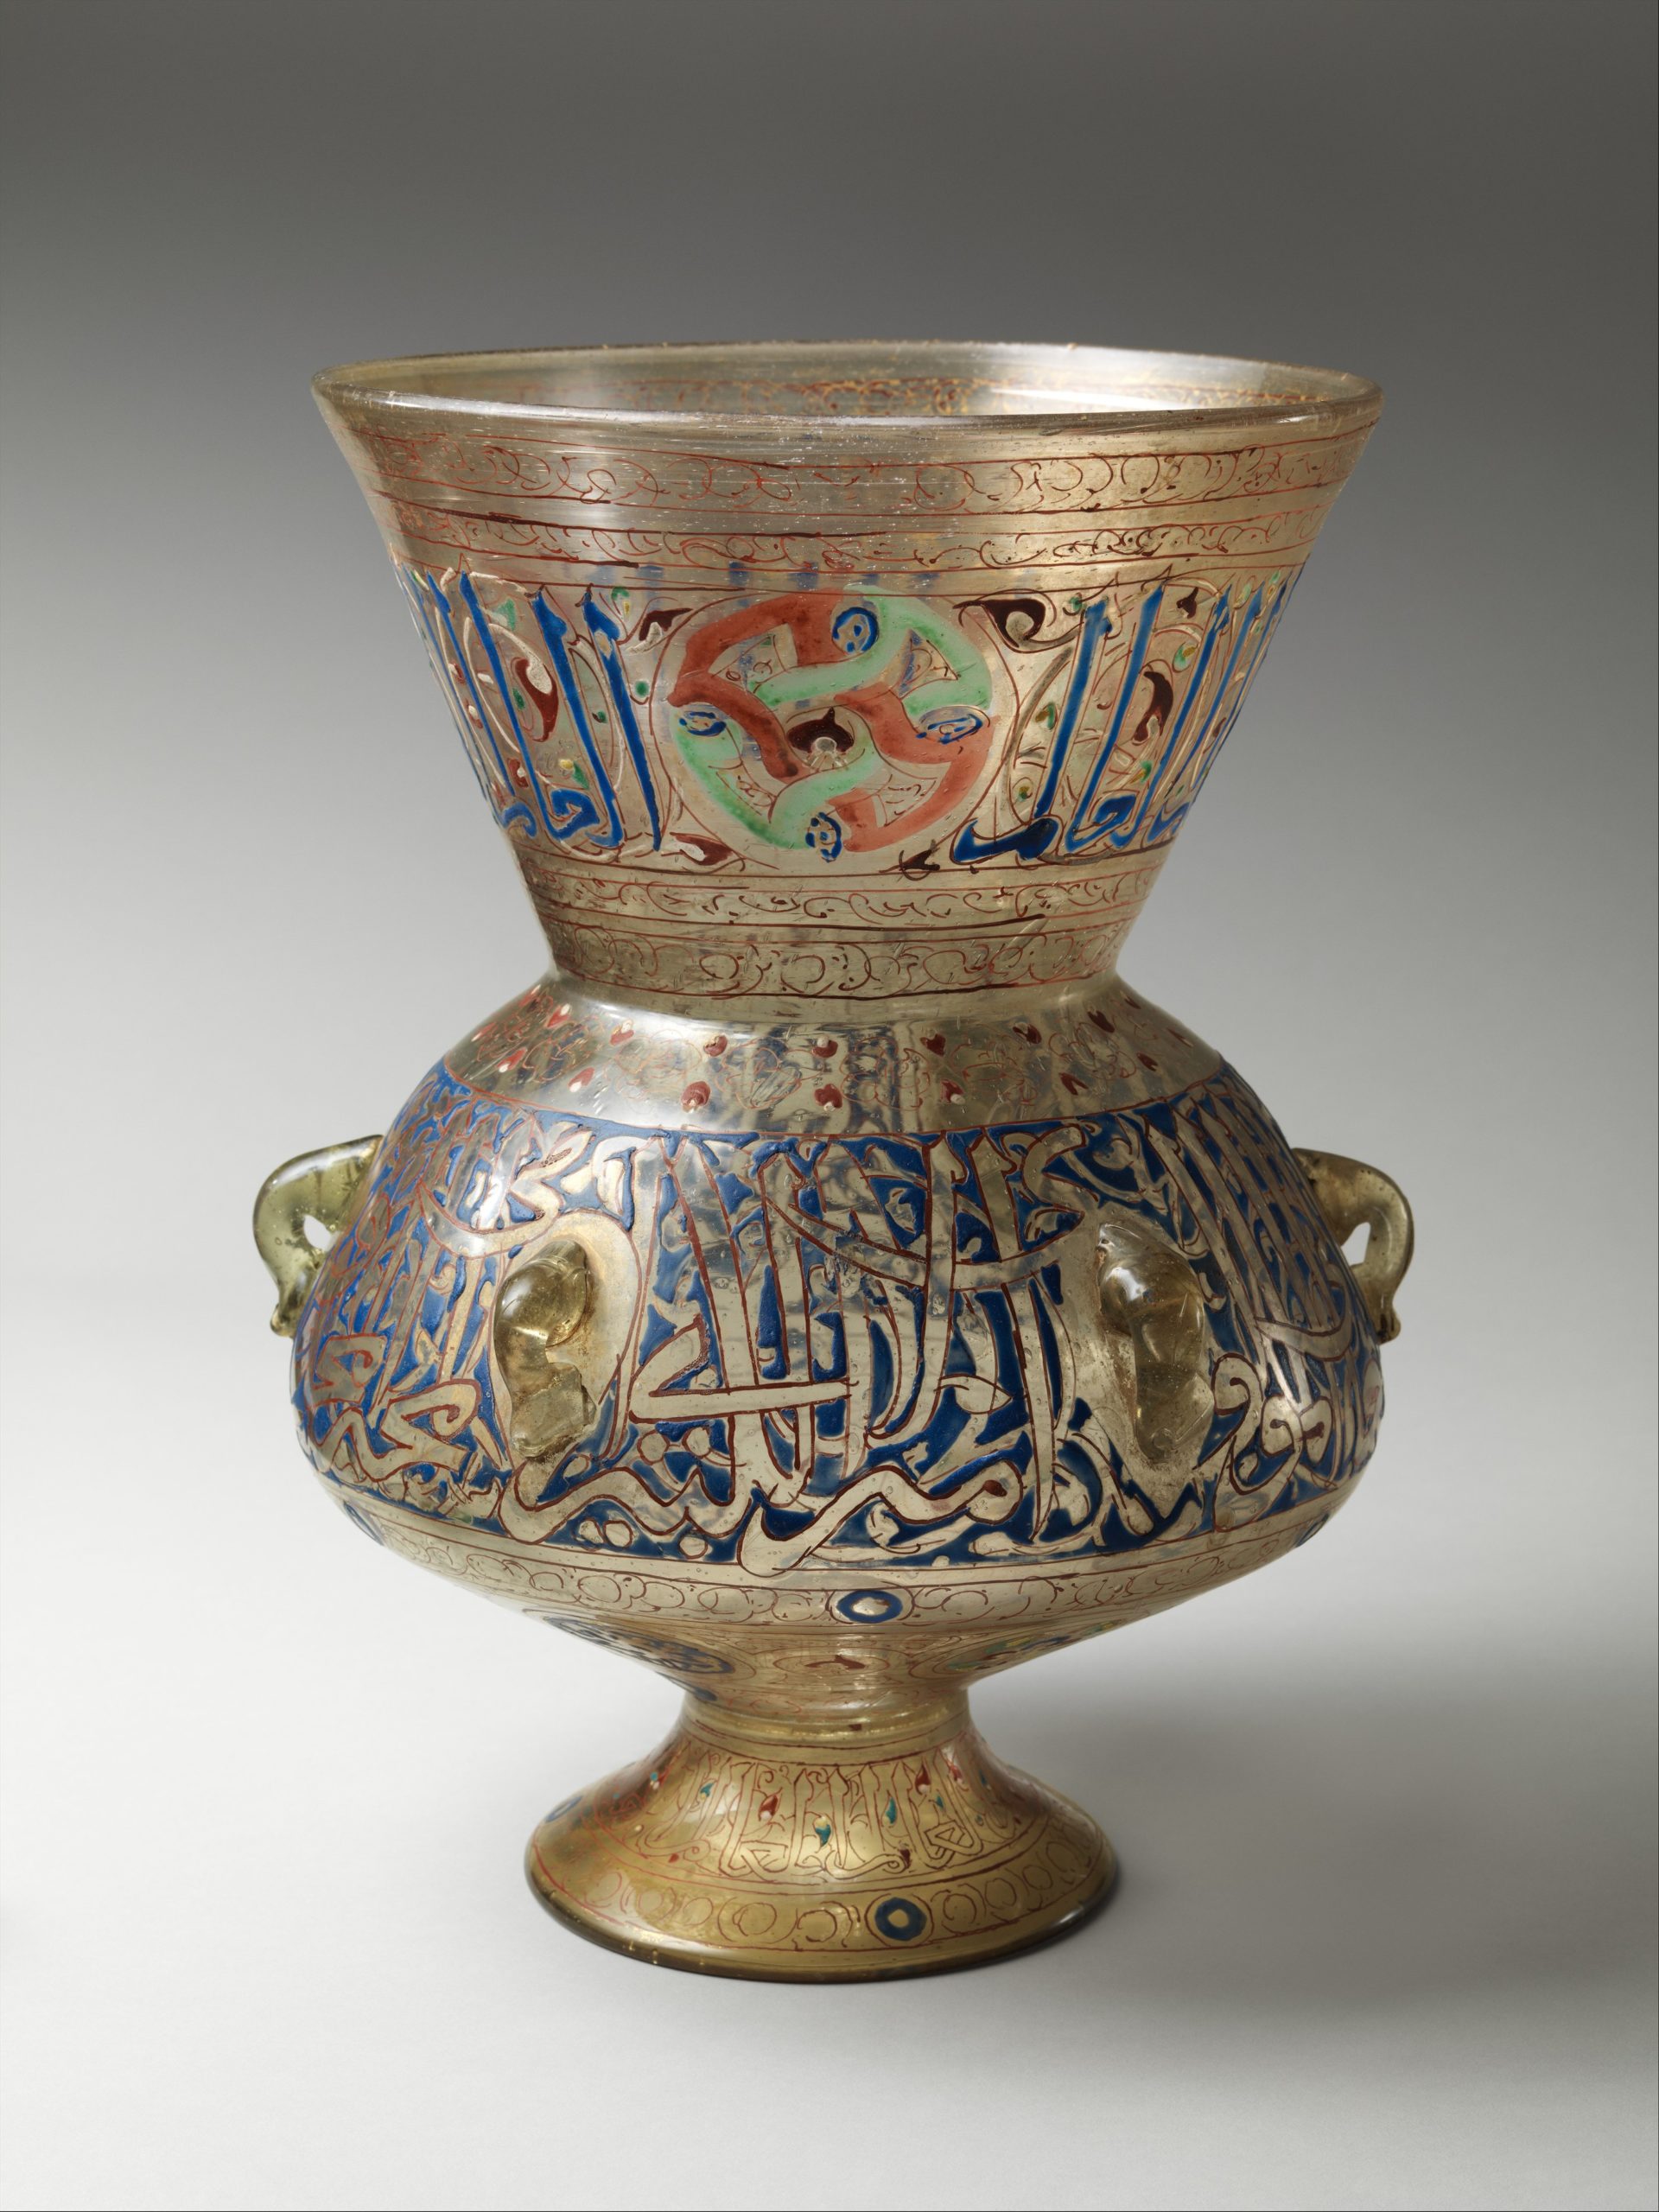 Mosque lamp, 14th century, Egypt or Syria, blown glass, enamel, gilding, 31.8 x 23.2 cm (Metropolitan Museum of Art)